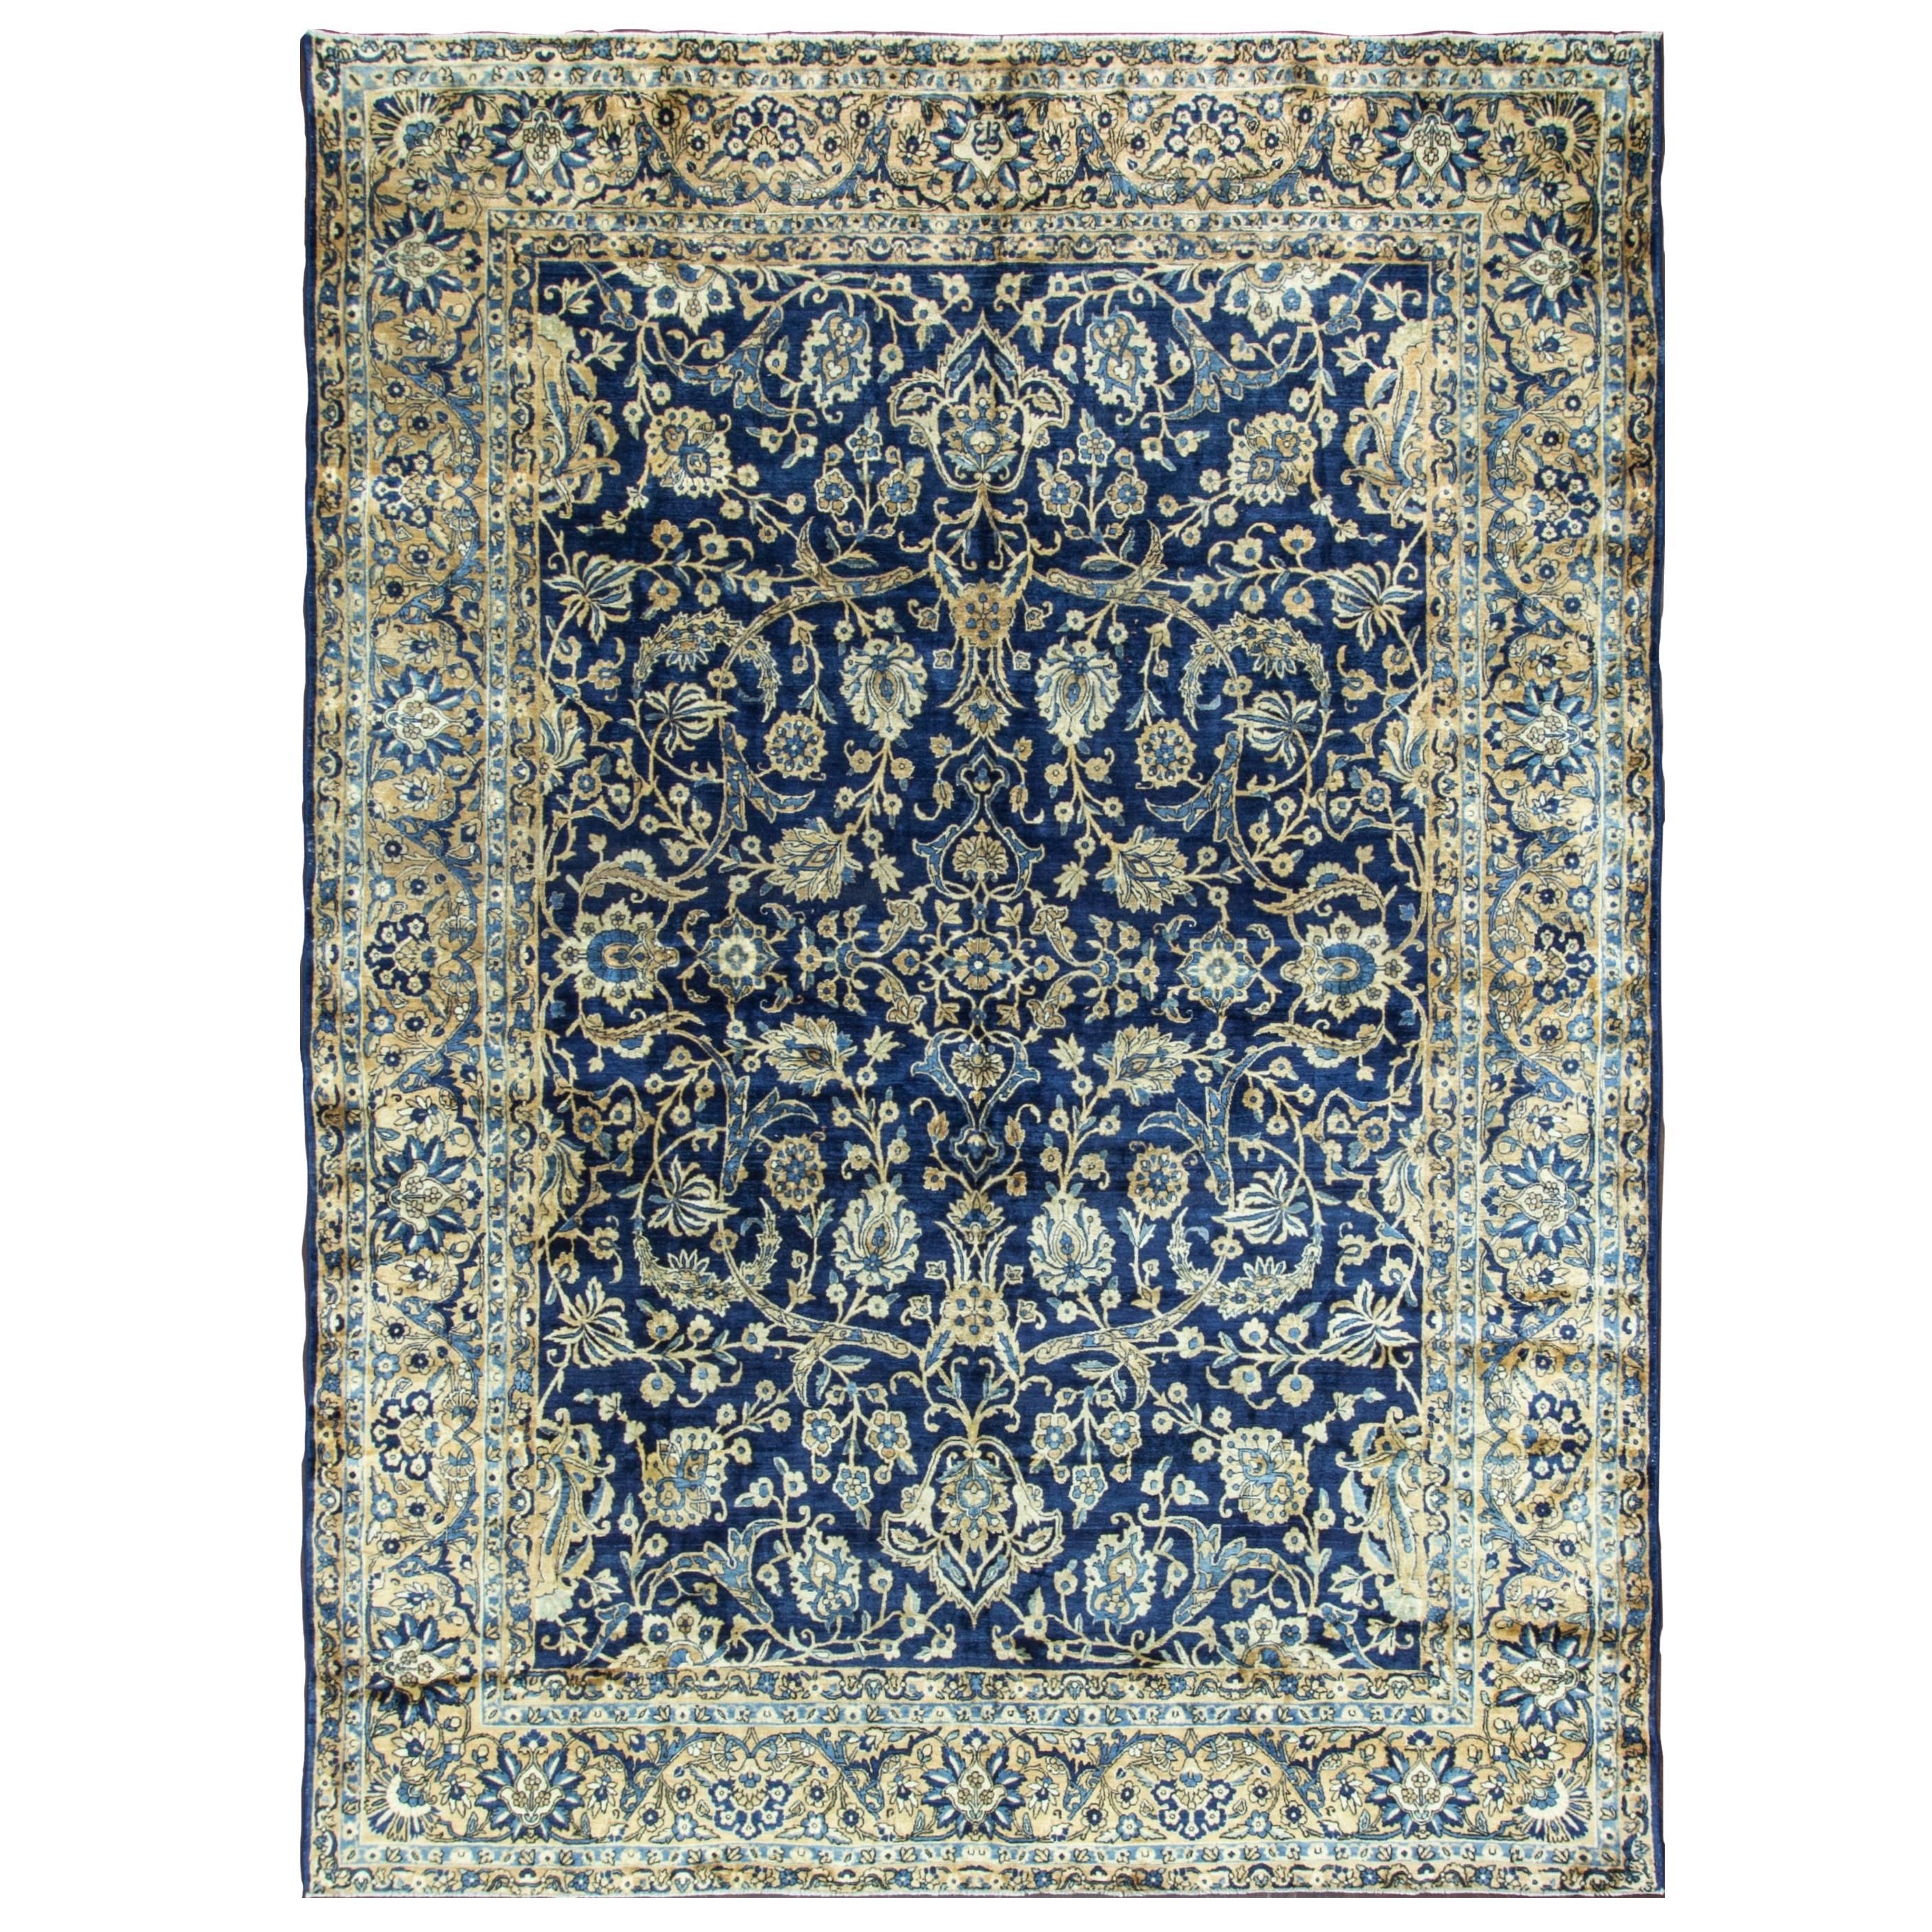 Antique Persian Laver Kerman Carpet, 8'5" x 11'7"